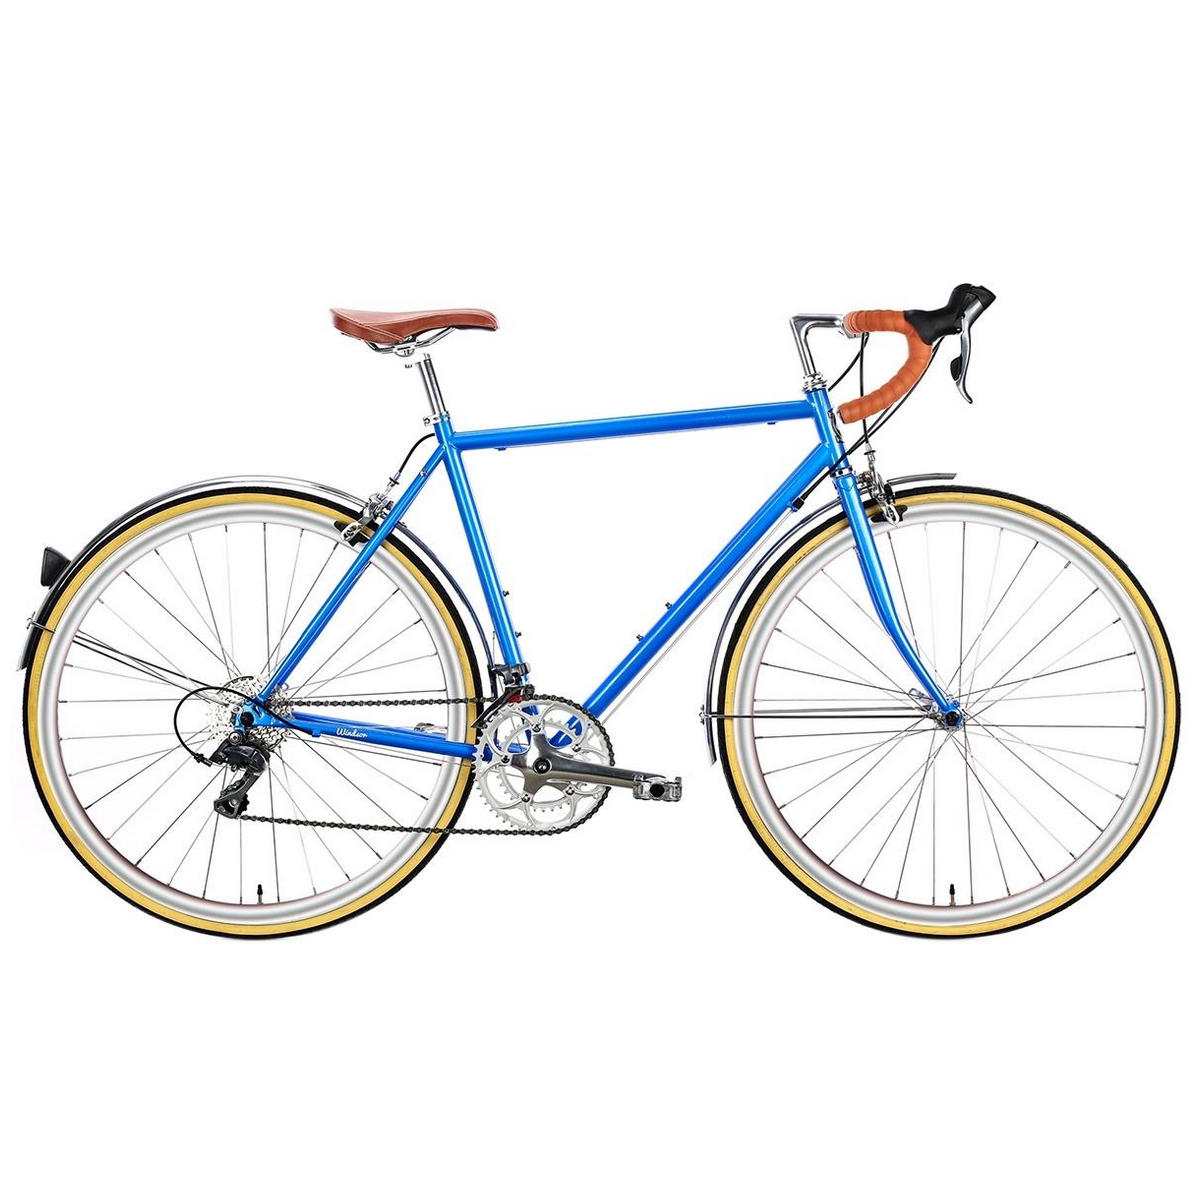 Bicicleta urbana TROY 16spd azul windsor médio 54cm